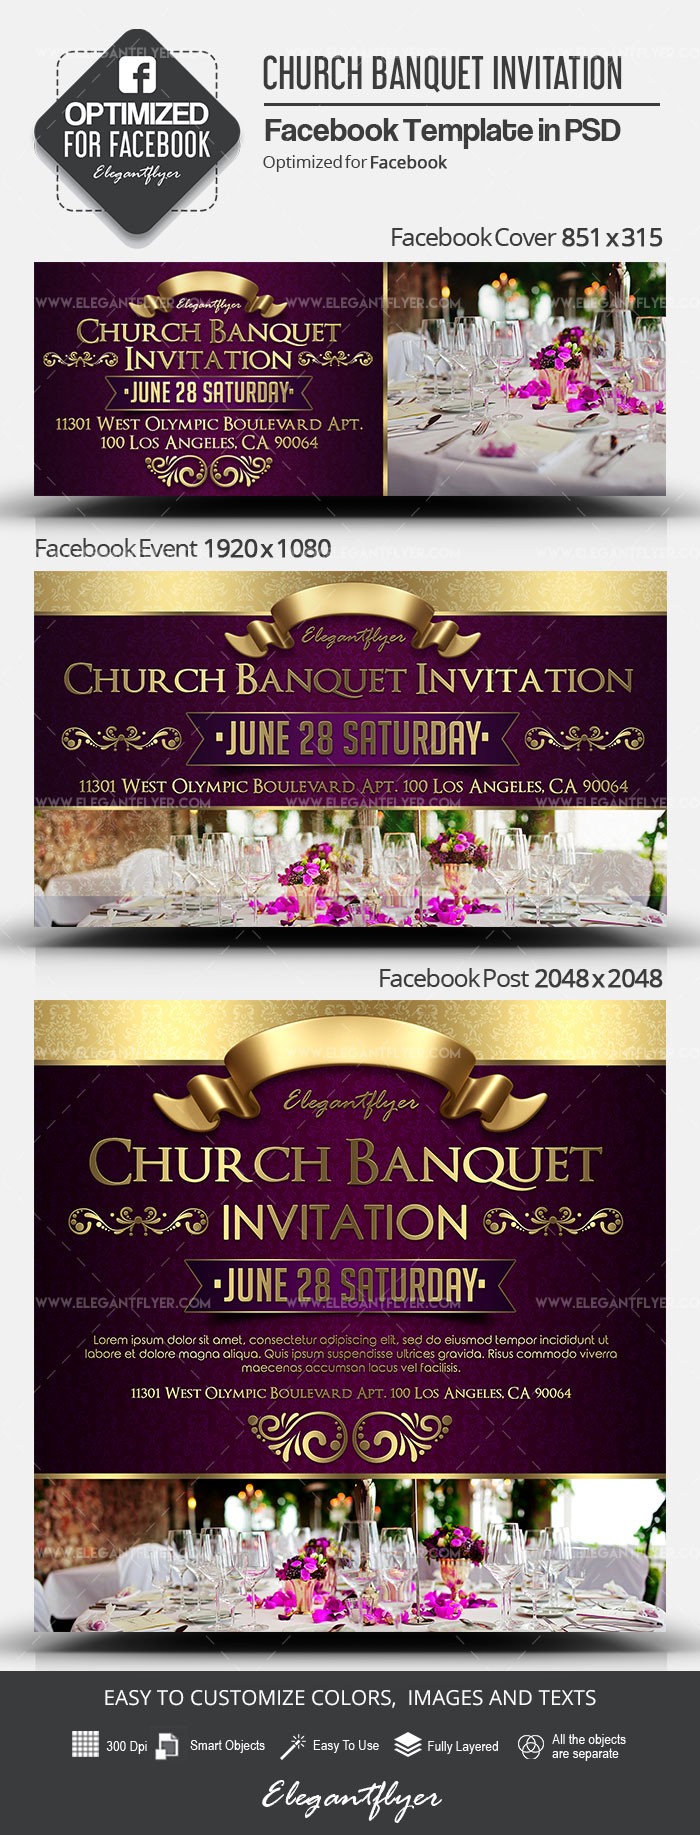 Church Banquet Invitation Facebook by ElegantFlyer